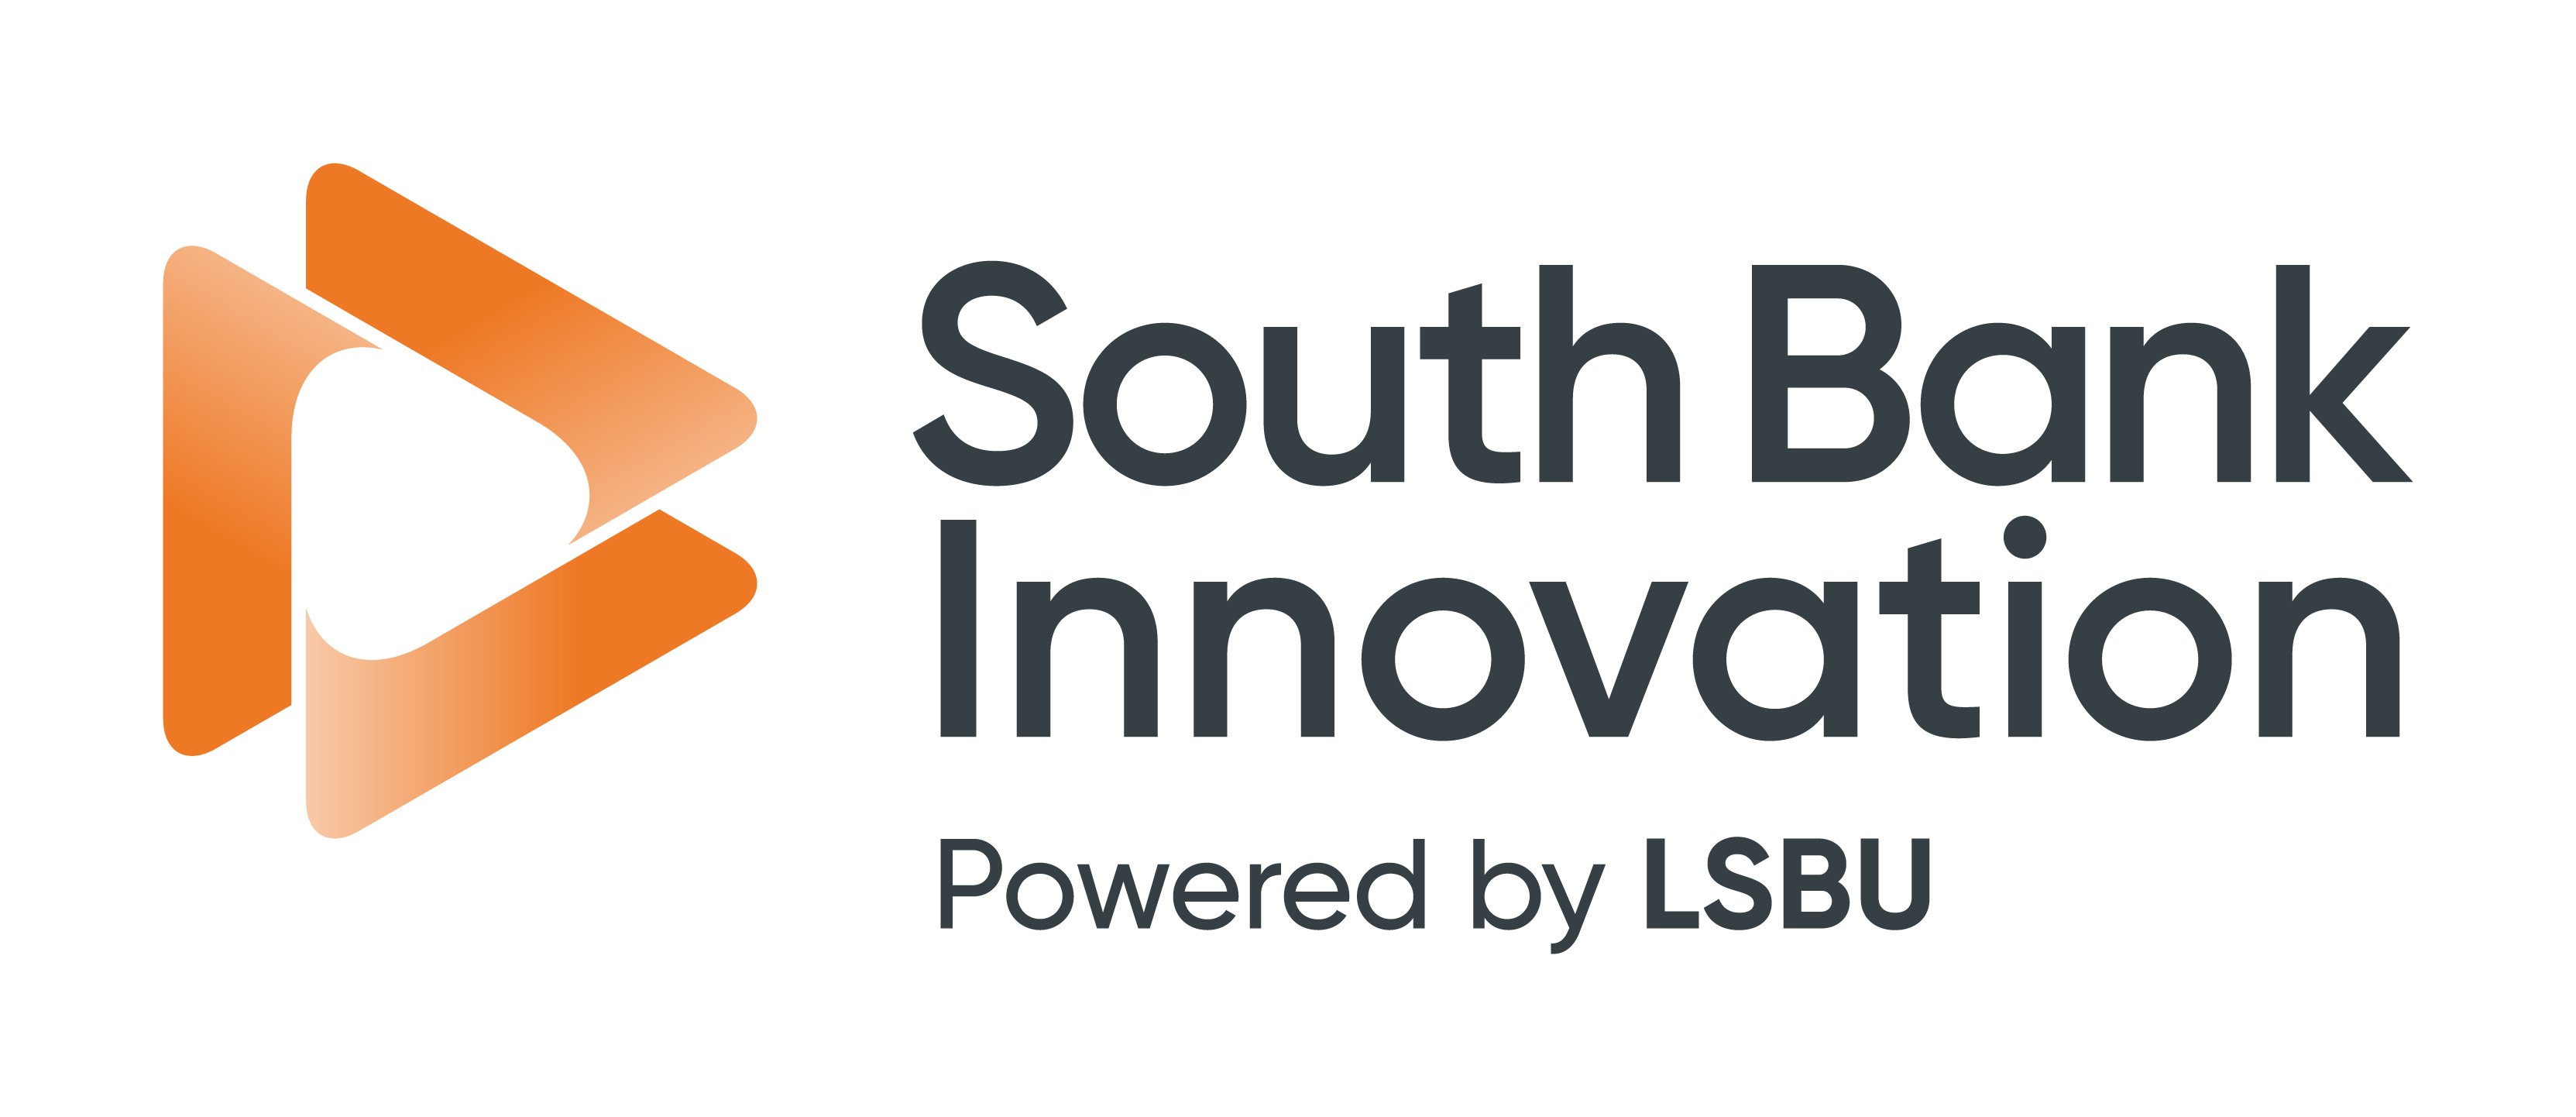 South Bank Innovation logo